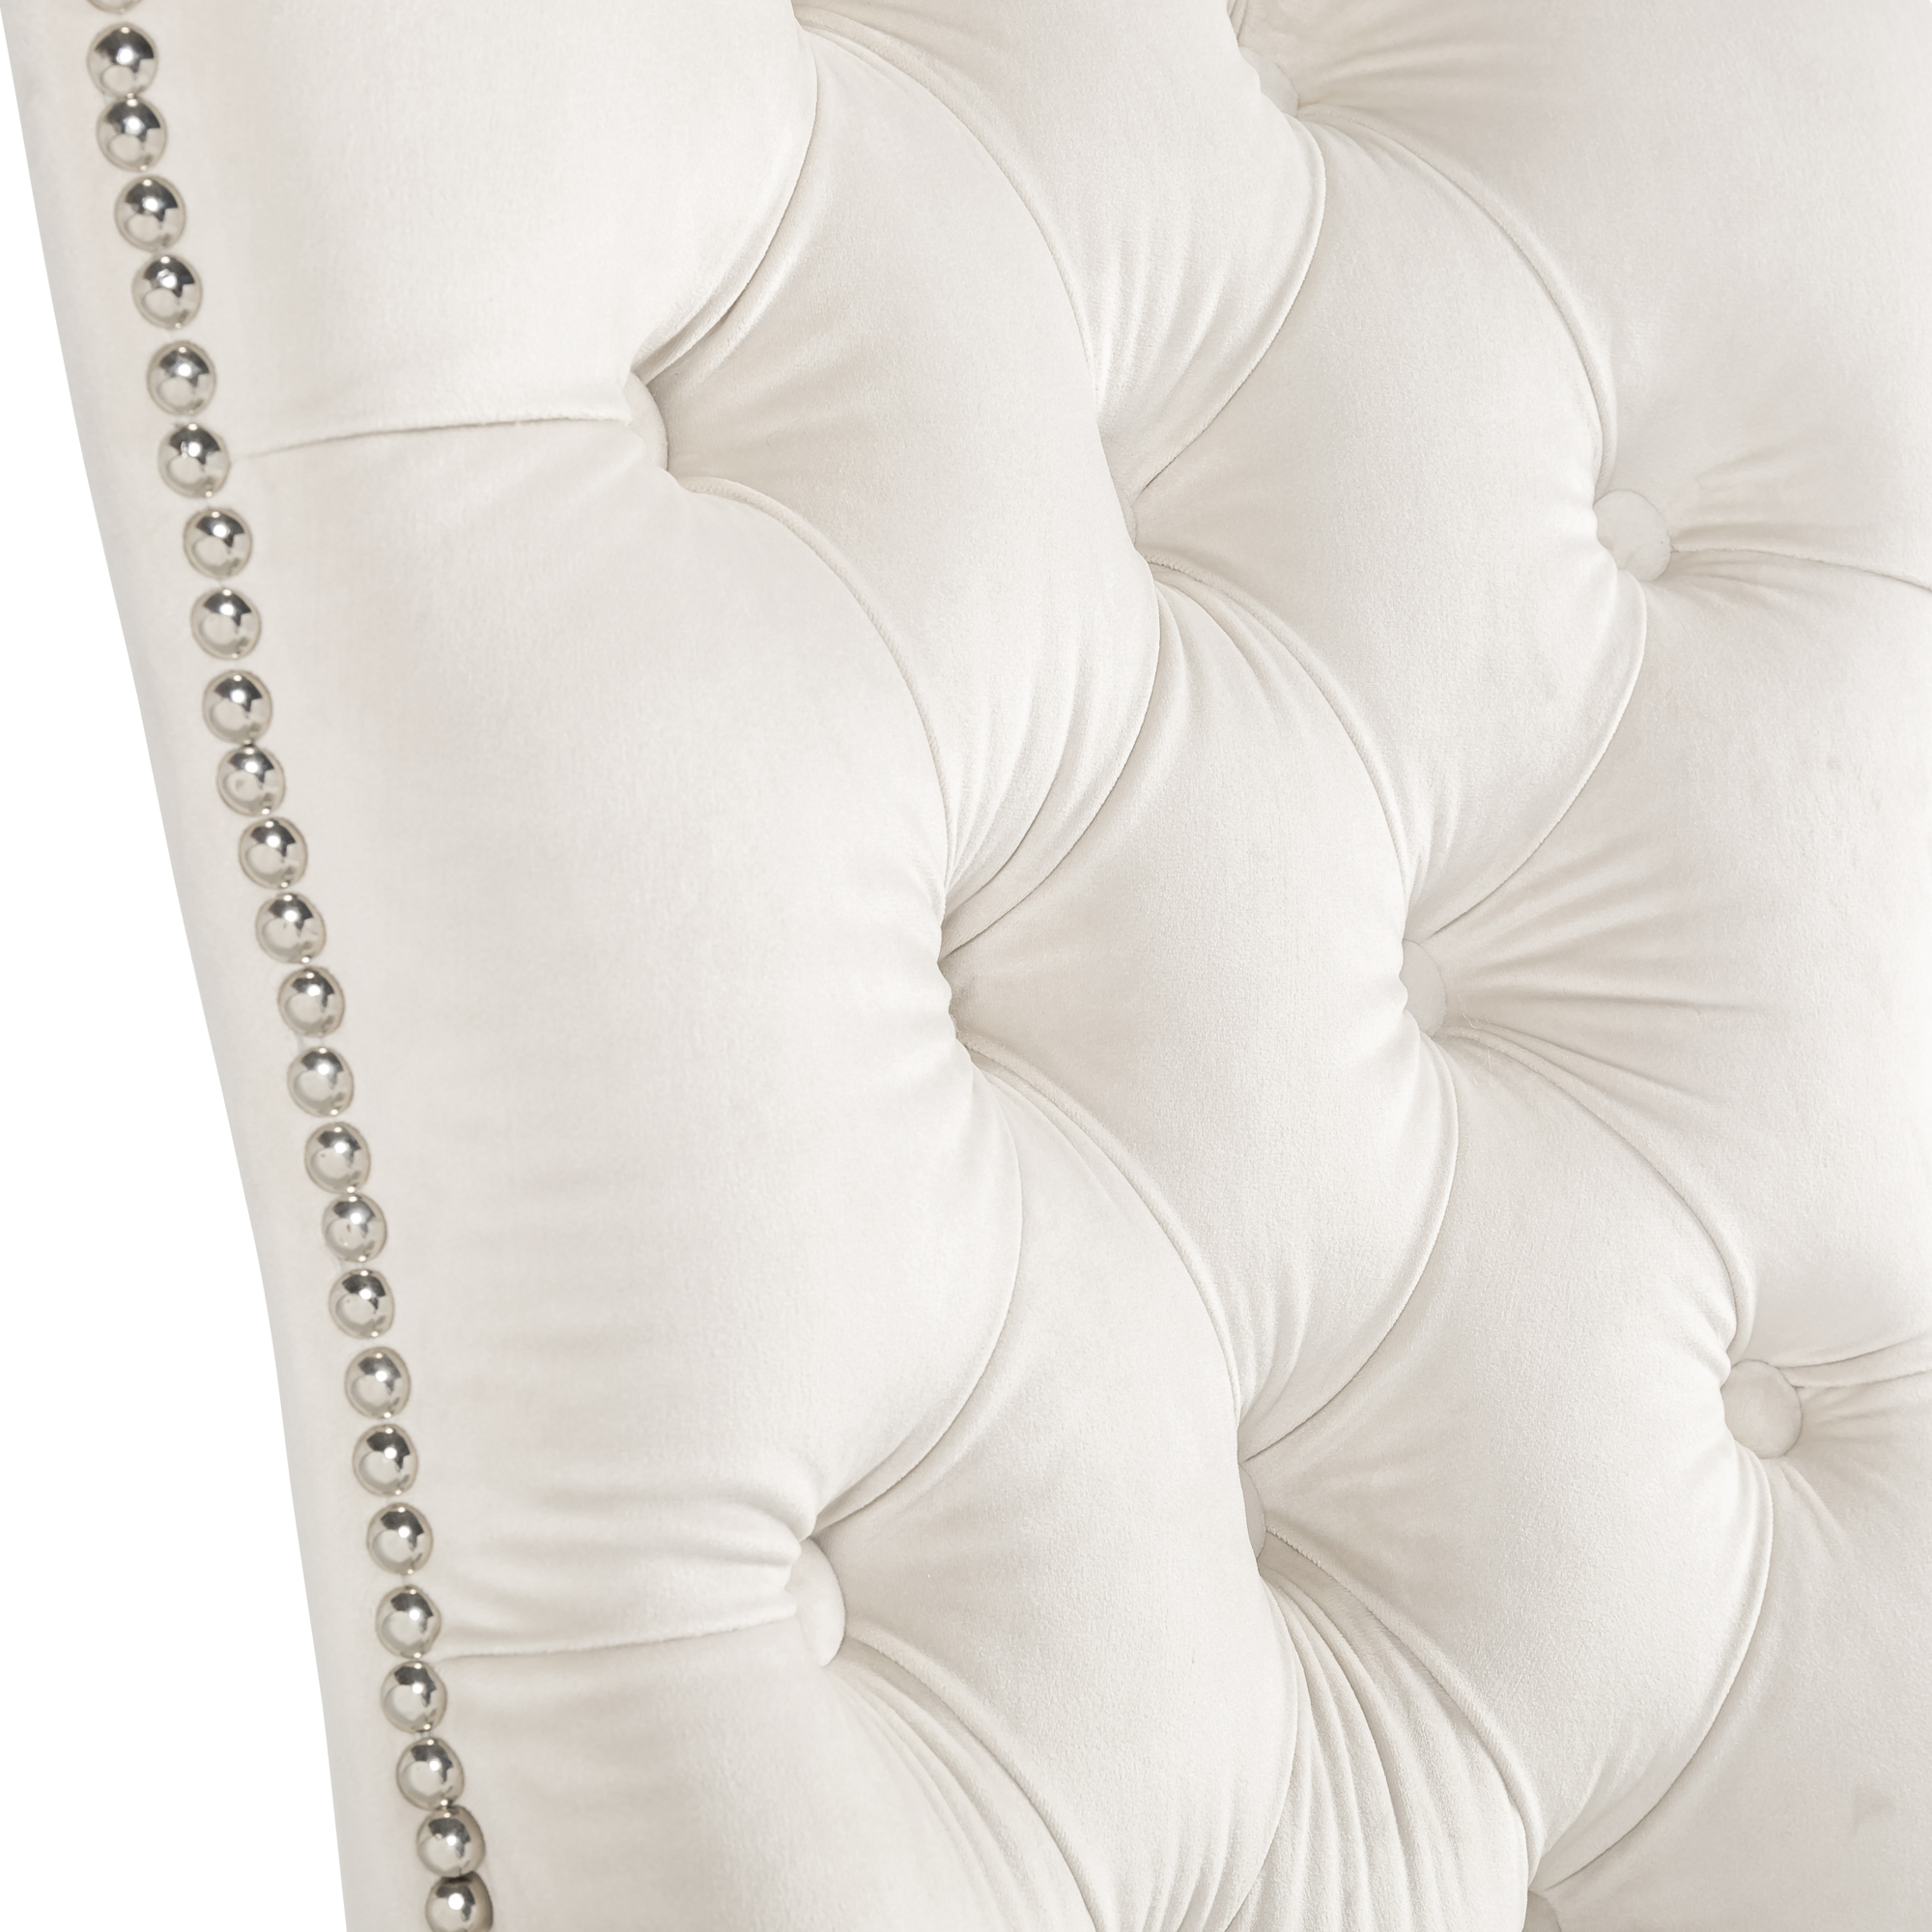 Hale Cream Brushed Velvet Studded & Hoop Dining Chair – White Painted Legs